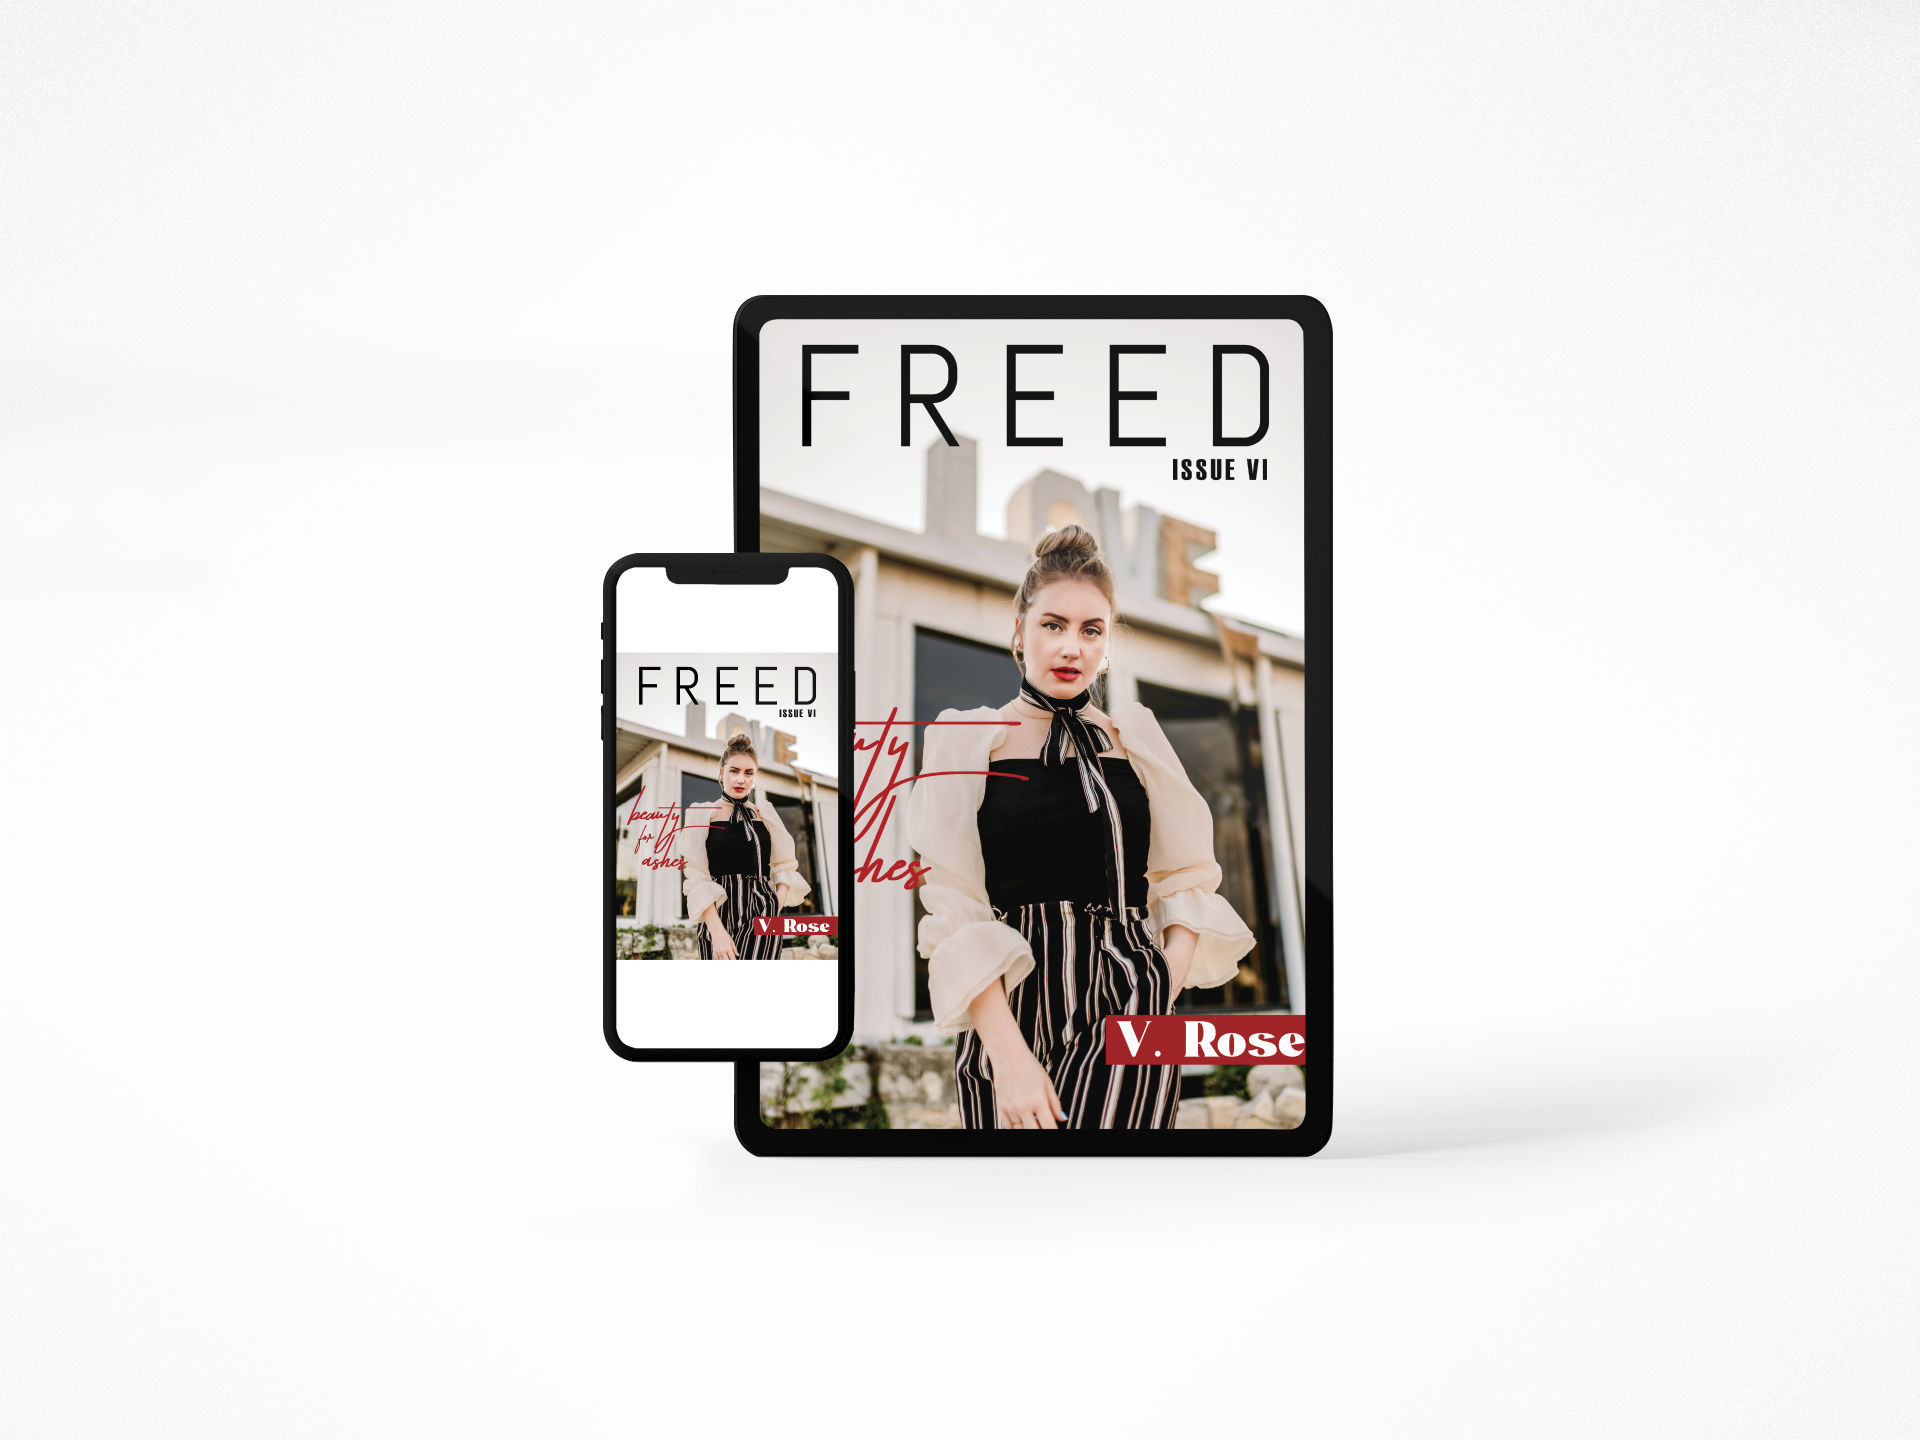 FREED Magazine Issue VI Mockup 15.png